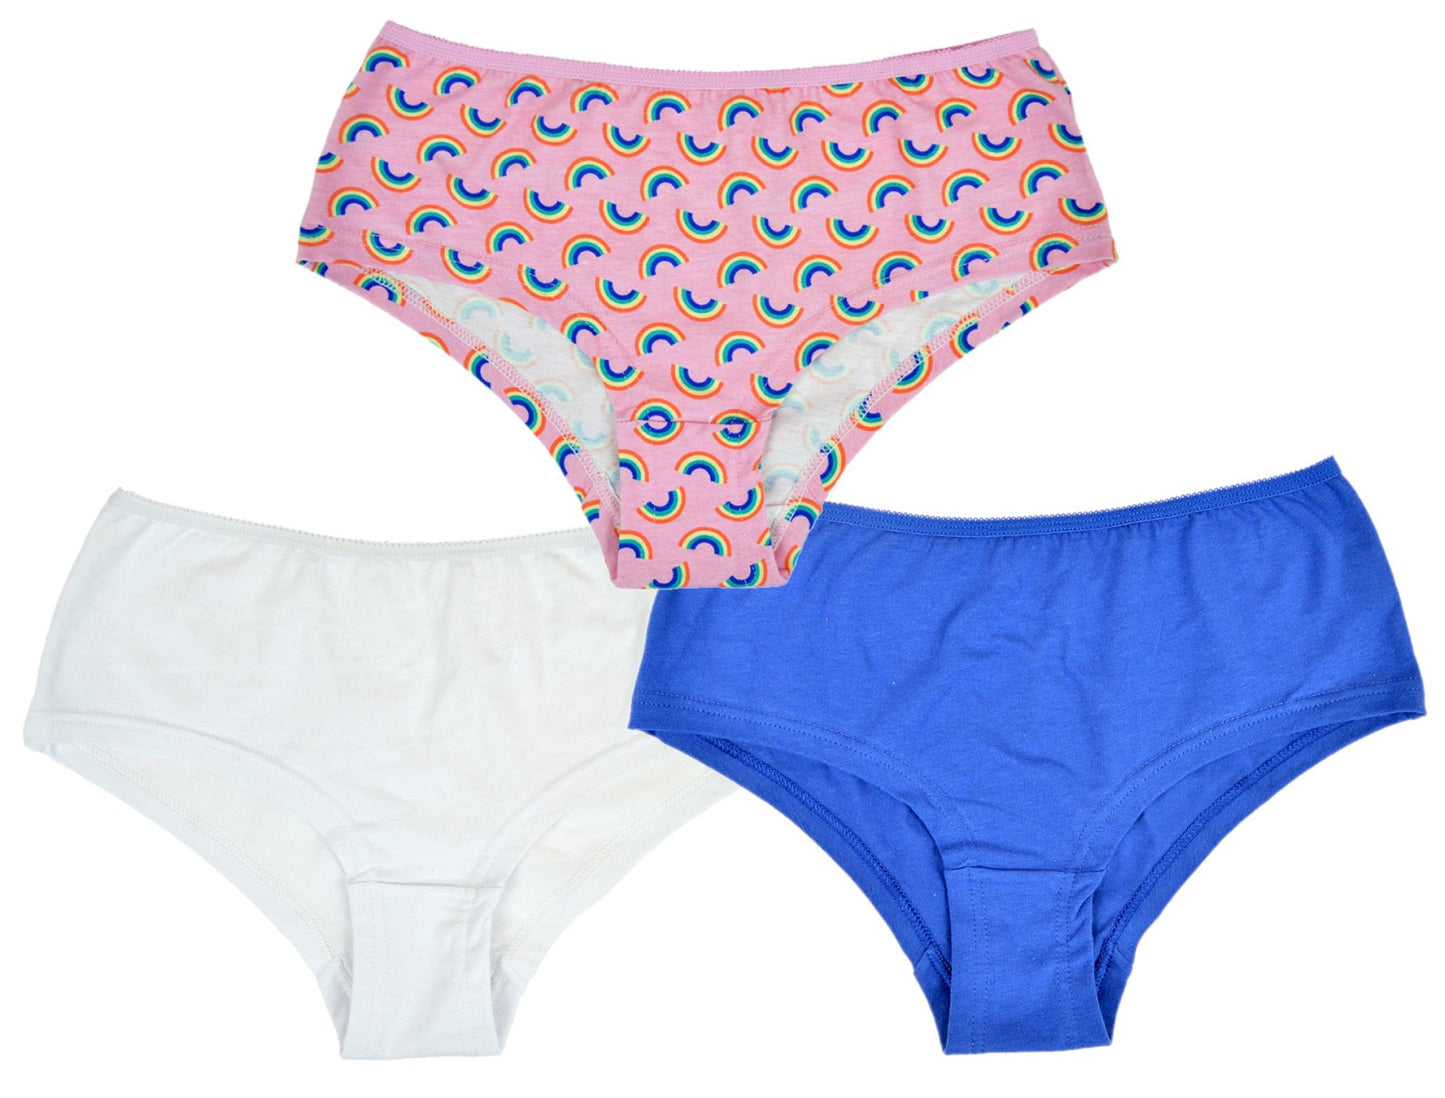 3 Pack Girls Rainbow Print Underwear Shorts Knickers